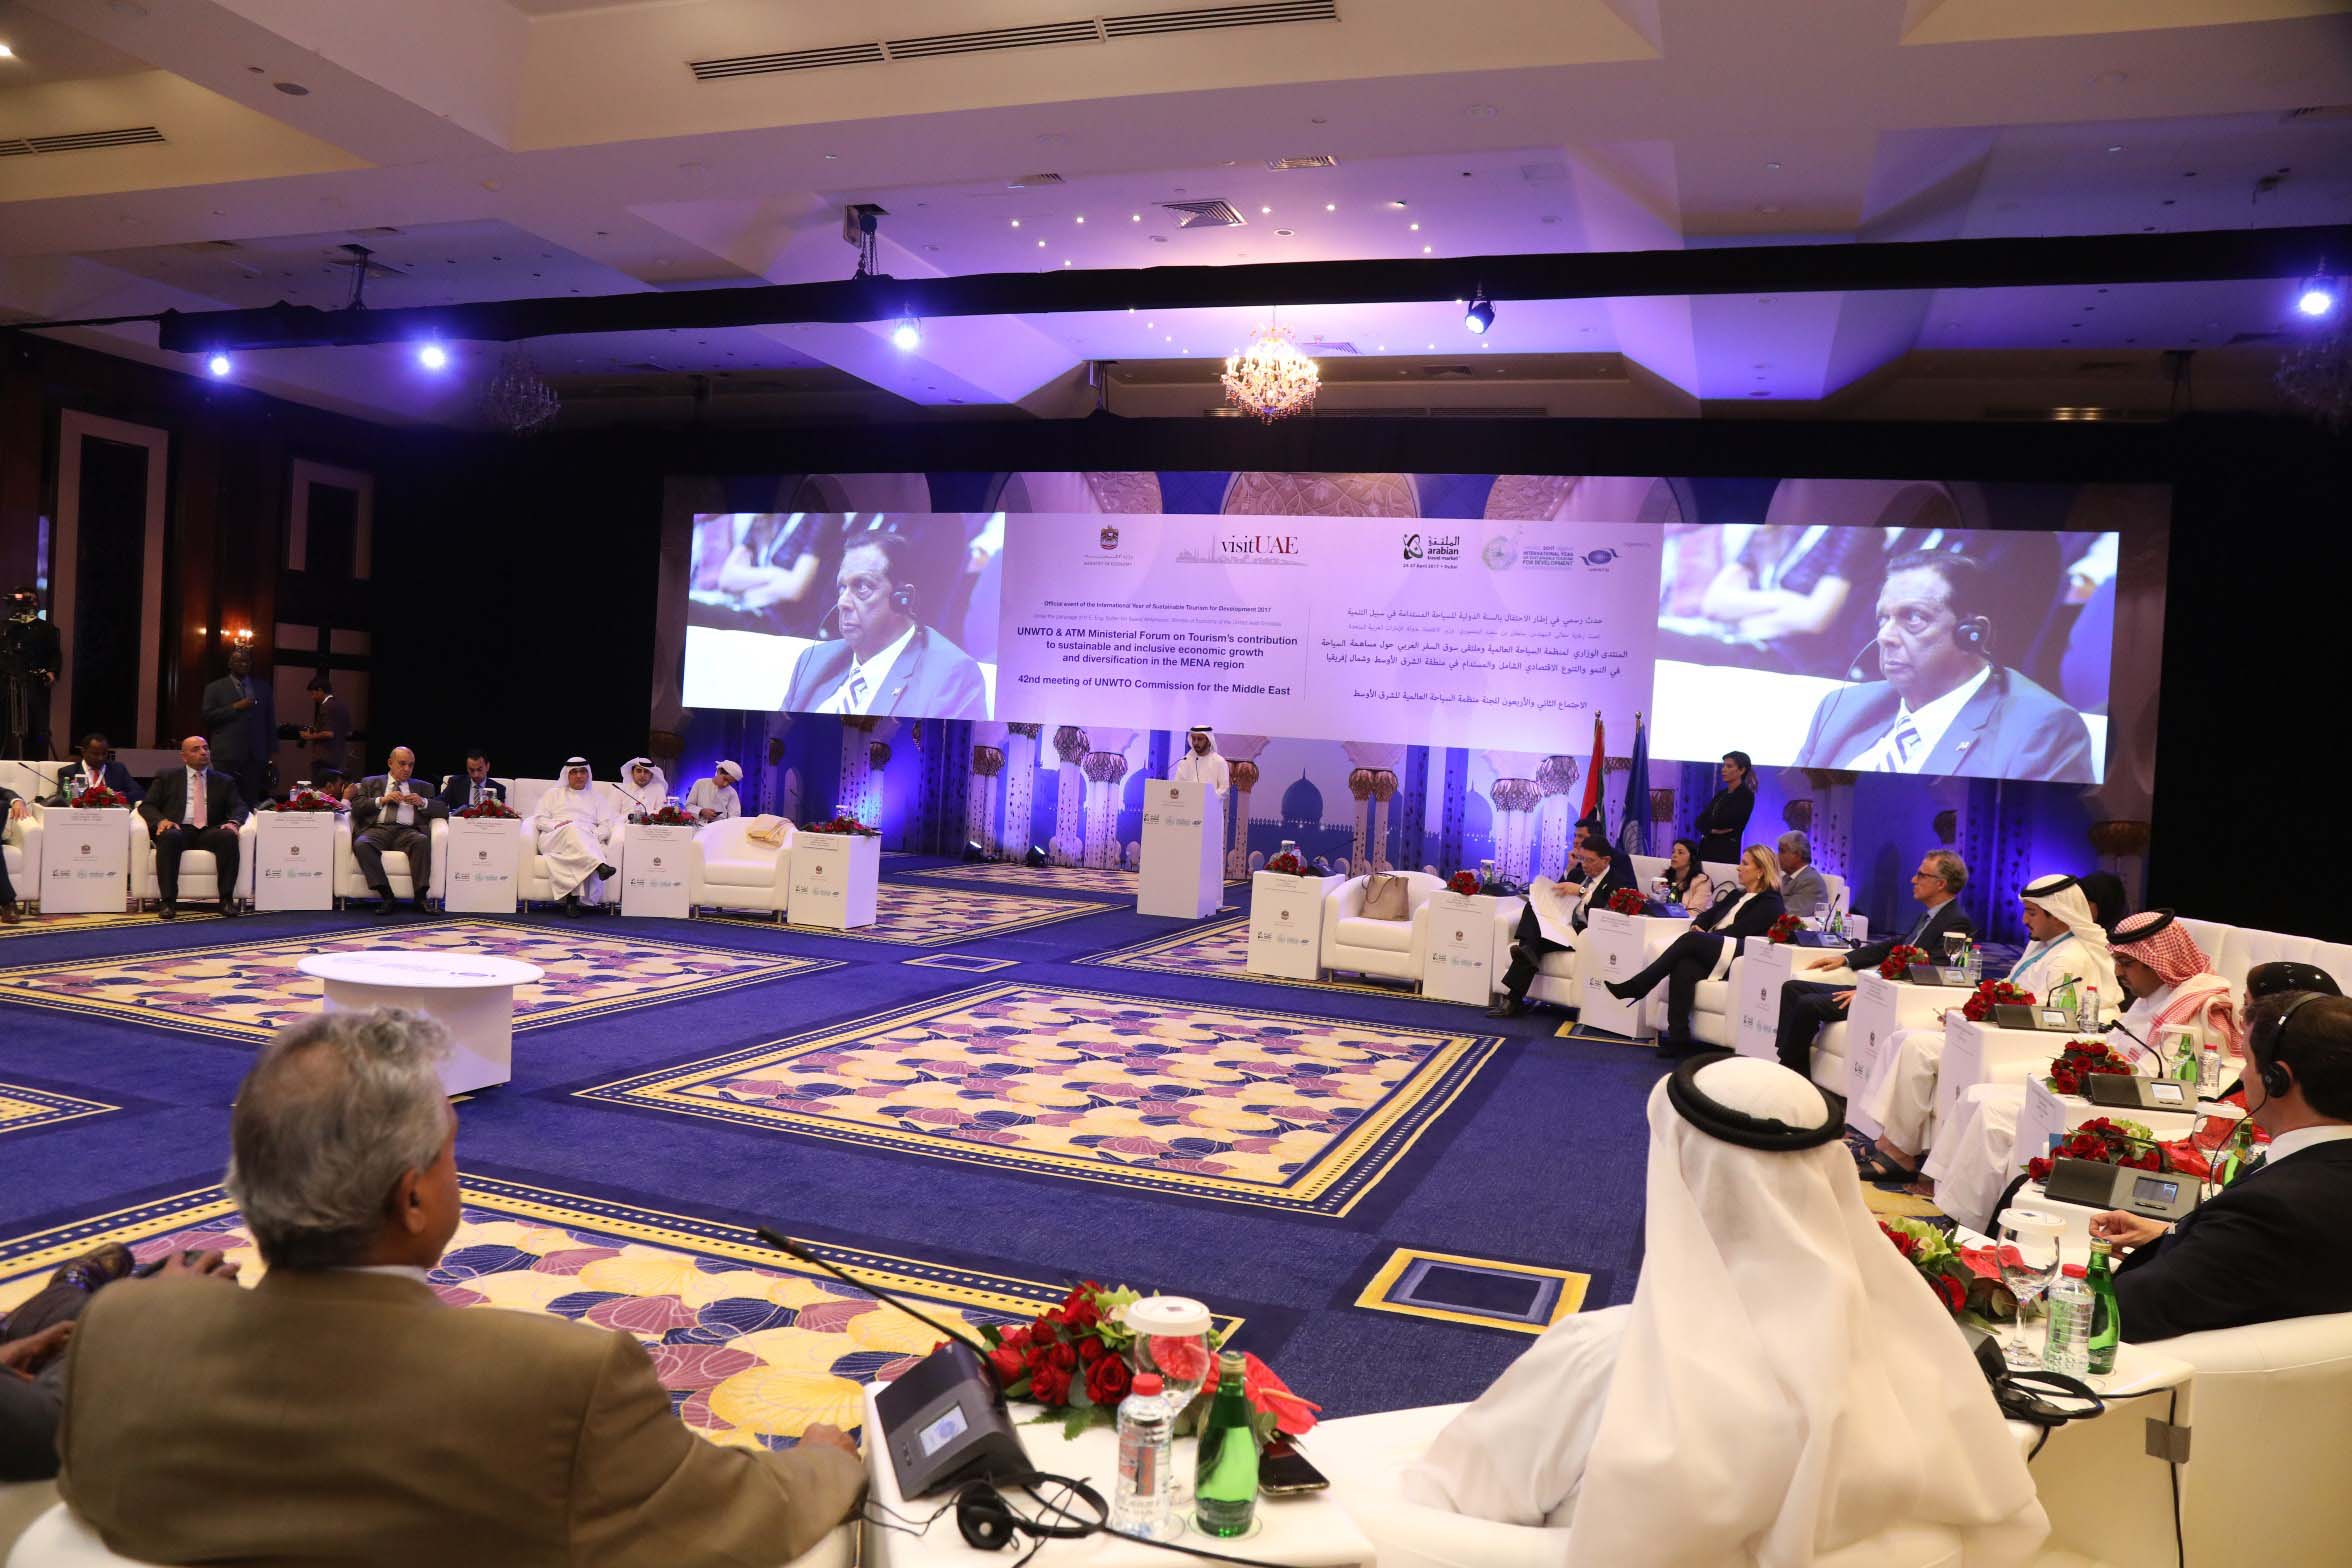 Oman's ministry of tourism wins social media award at Dubai travel expo